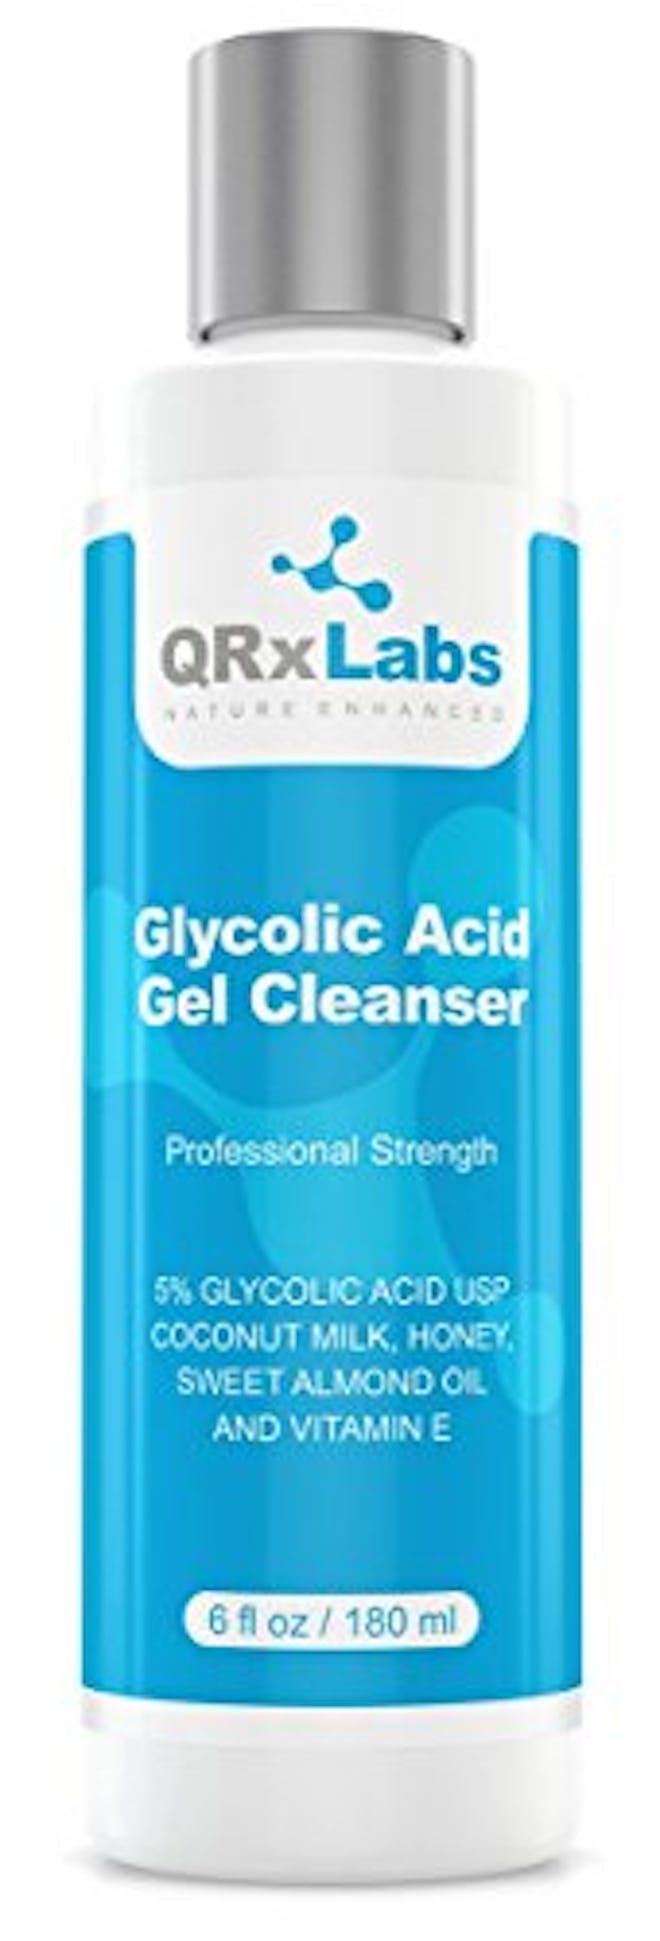 QRx Labs Glycolic Acid Gel Cleanser